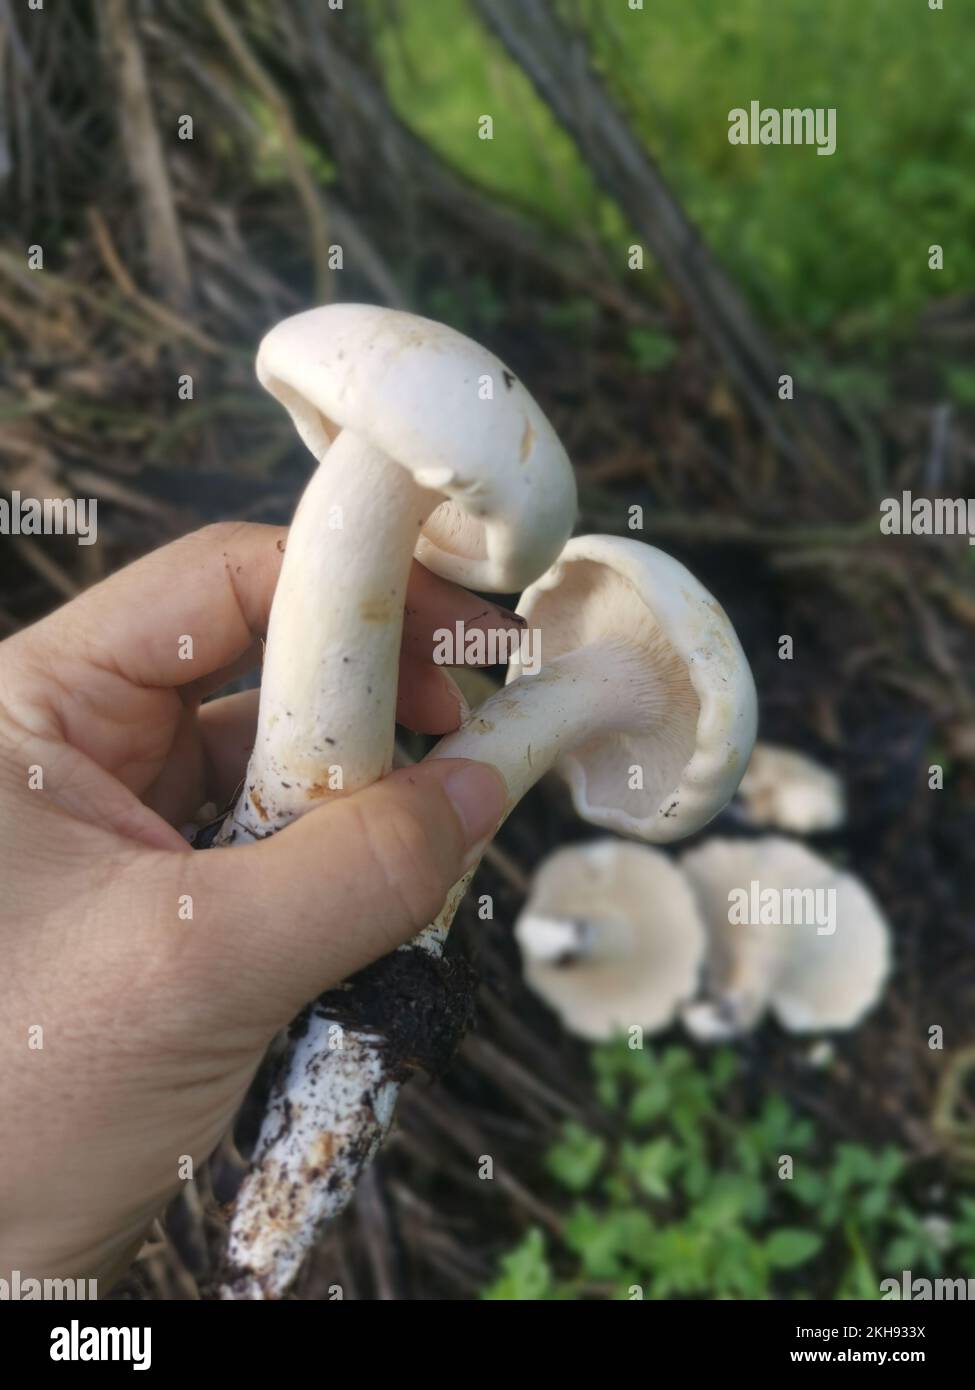 grandi funghi bianchi selvatici di leucopax sul terreno Foto Stock